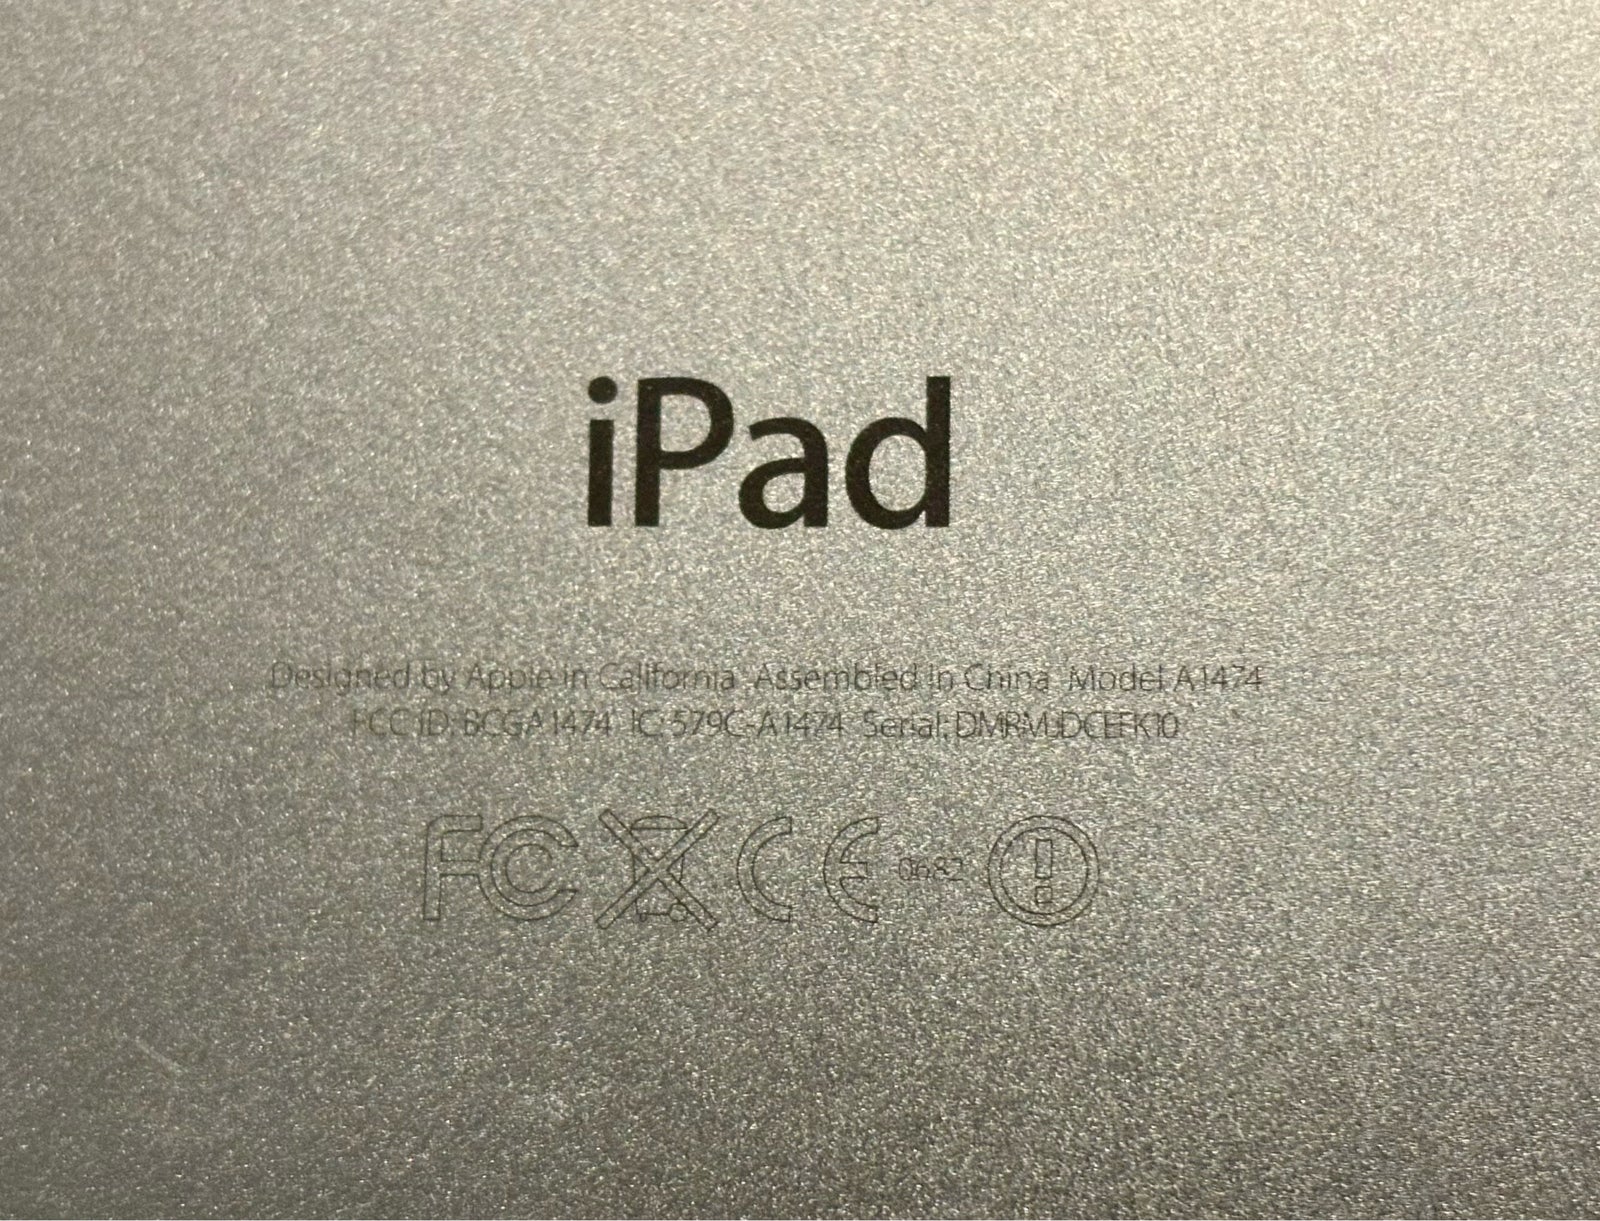 iPad Air, 16 GB, sort